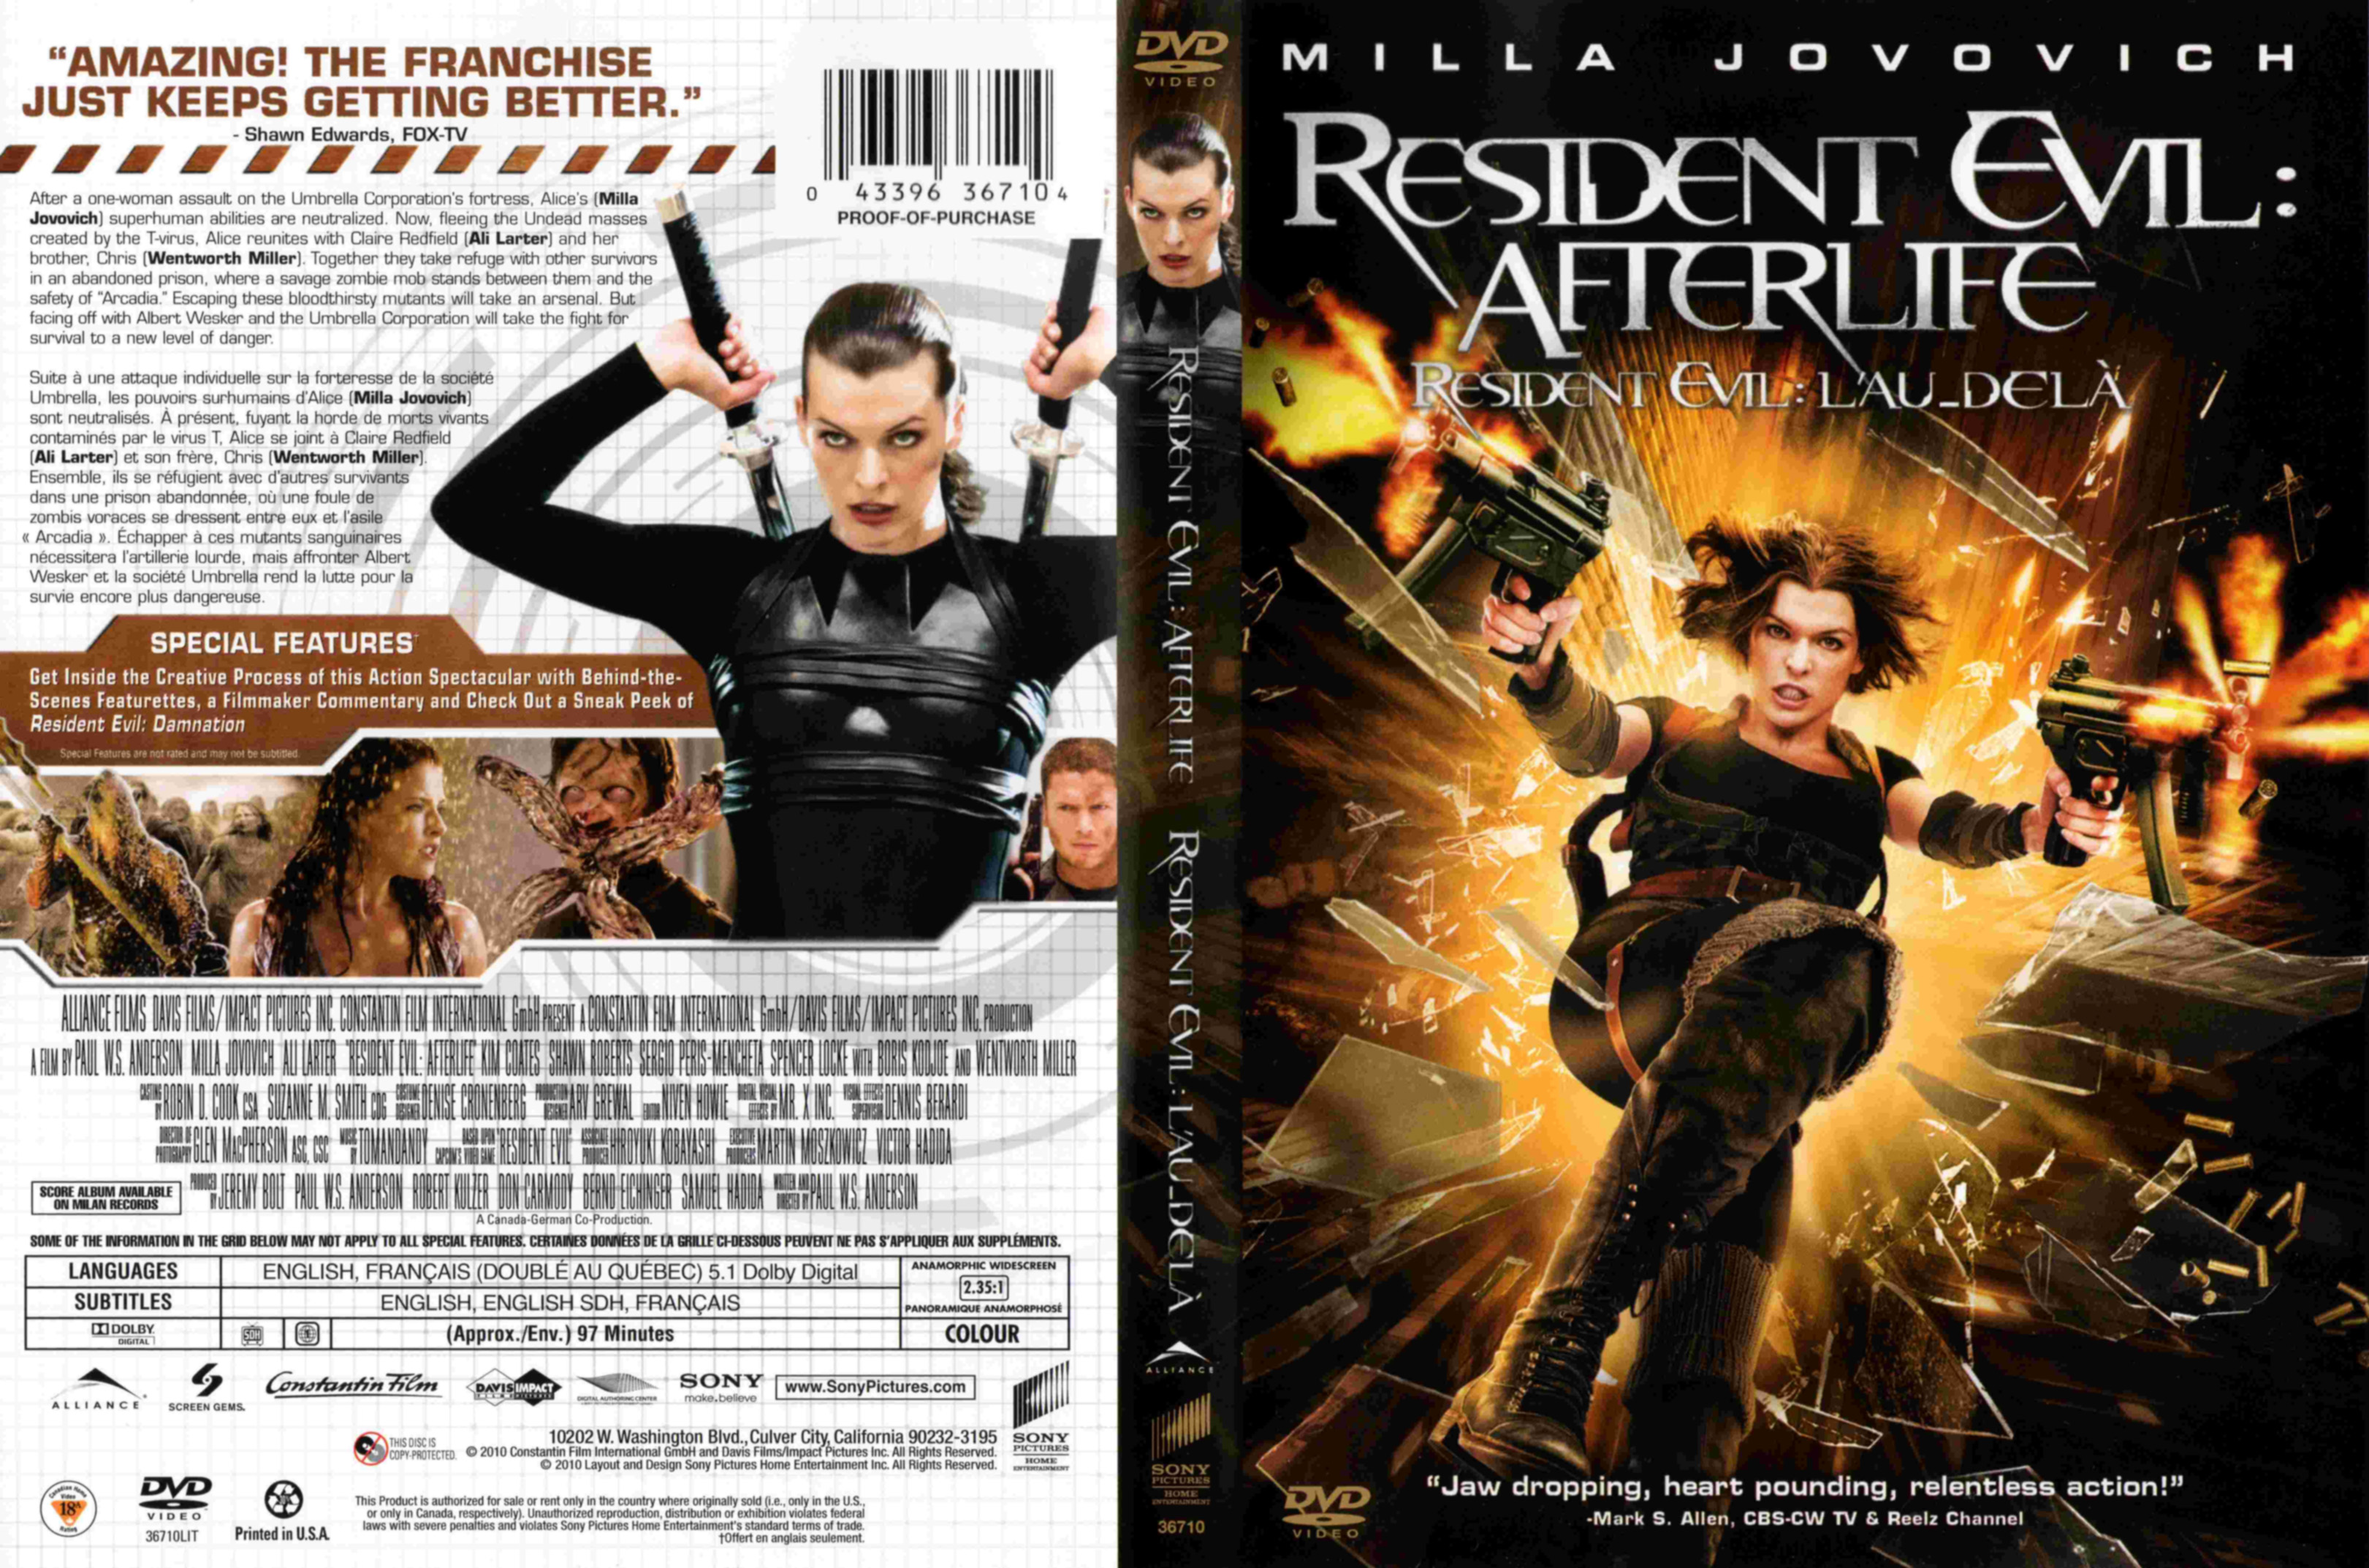 Jaquette DVD Resident Evil Afterlife (Canadienne)